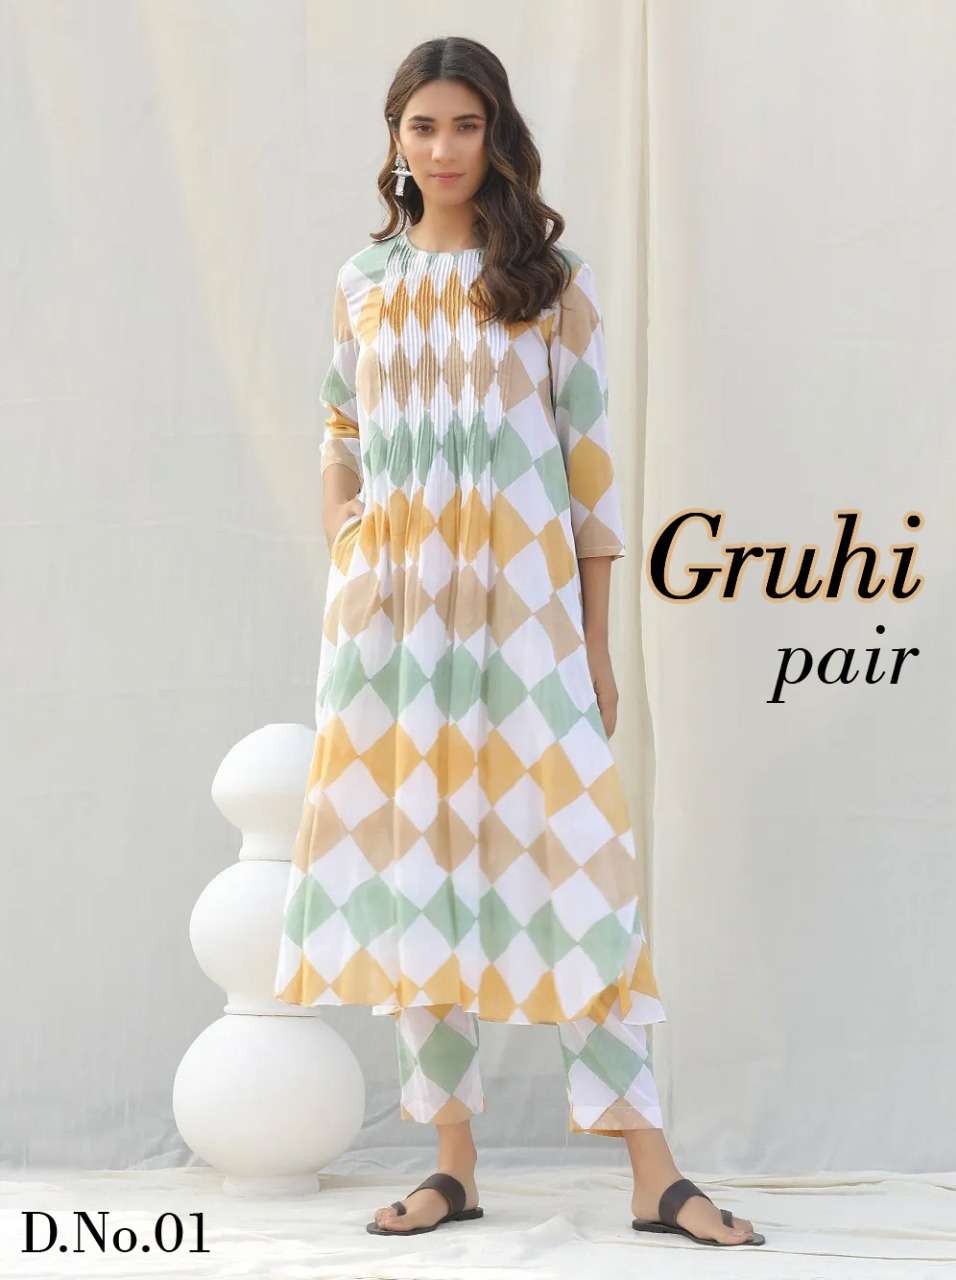 gruhi pair kurati and pant 6 colour fabric cotton size m to xxl  length kurti 44 to 46 stylish cord set kurtie with pant in same prints coord set   